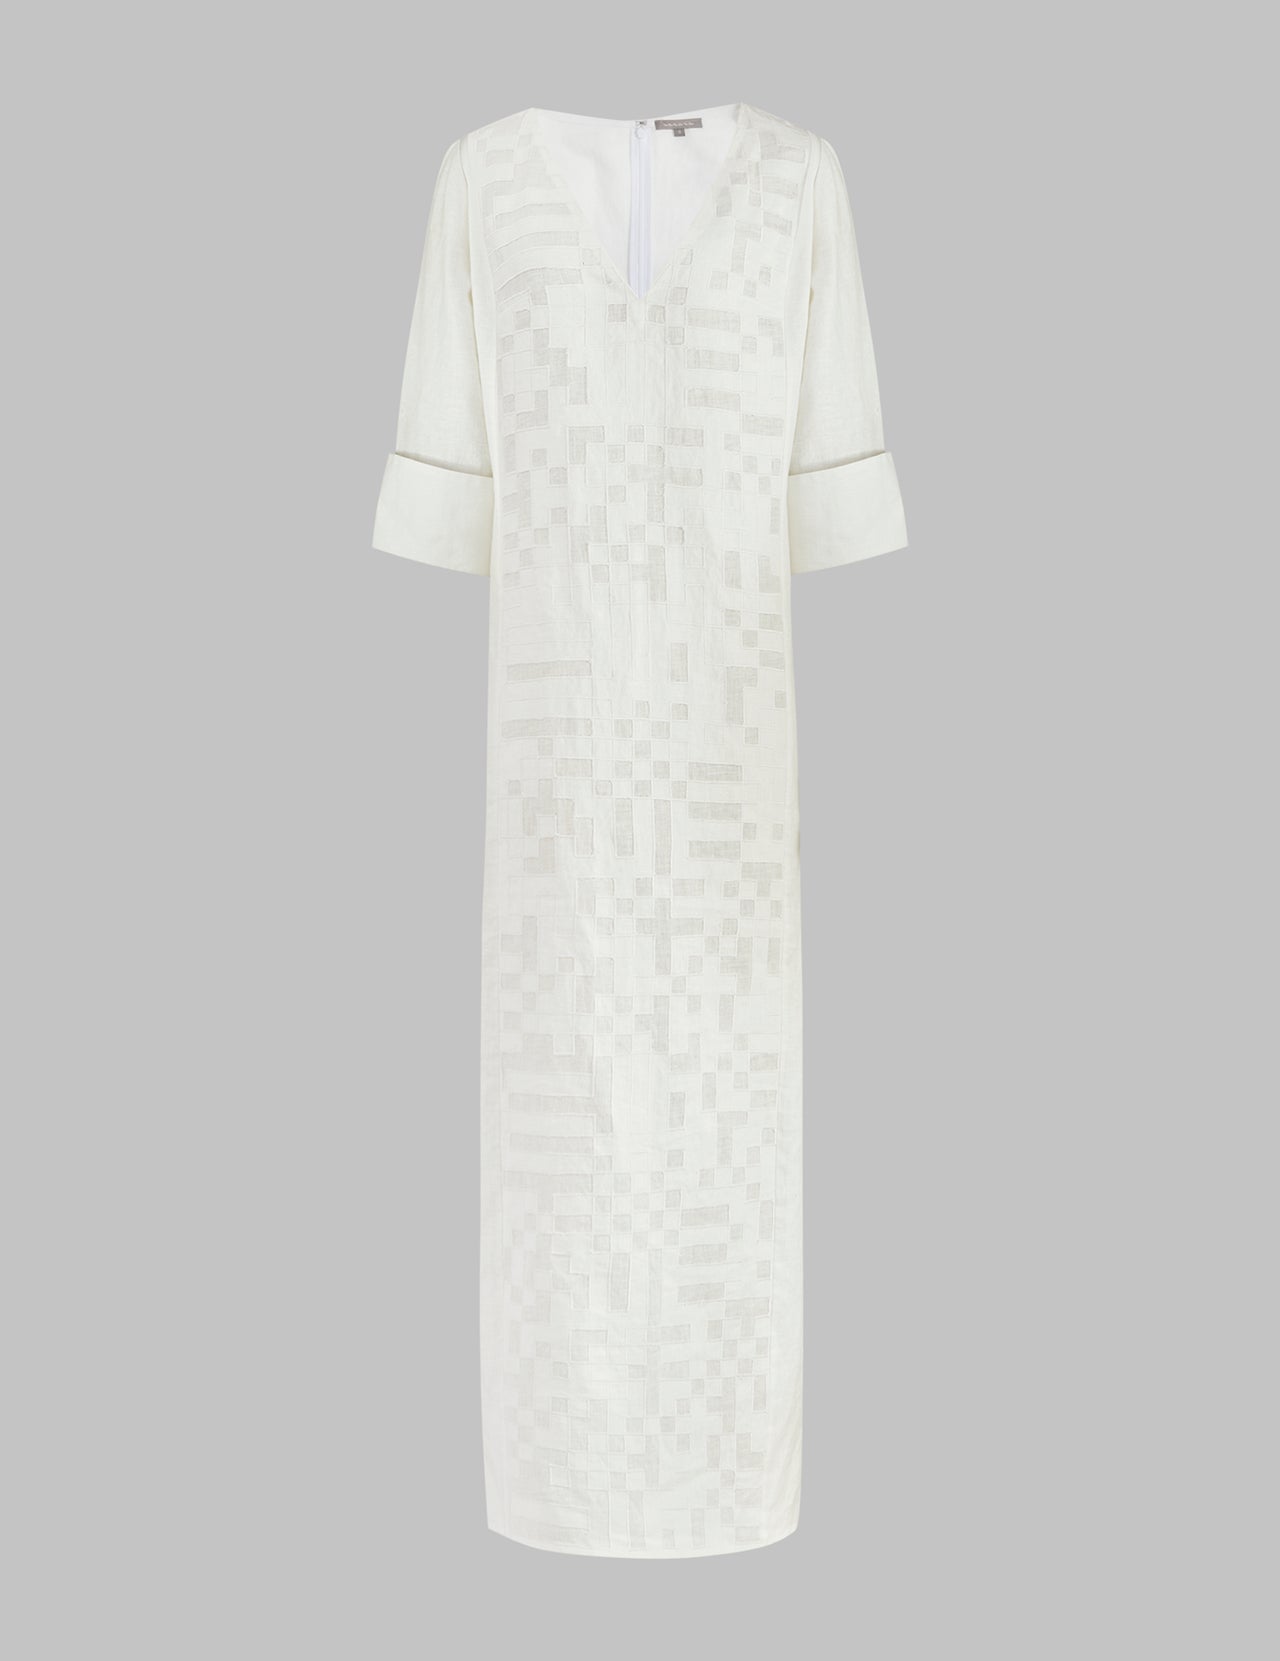  Off White Linen Maxi Dress with Jami Hand Cut Appliqué | Varana 